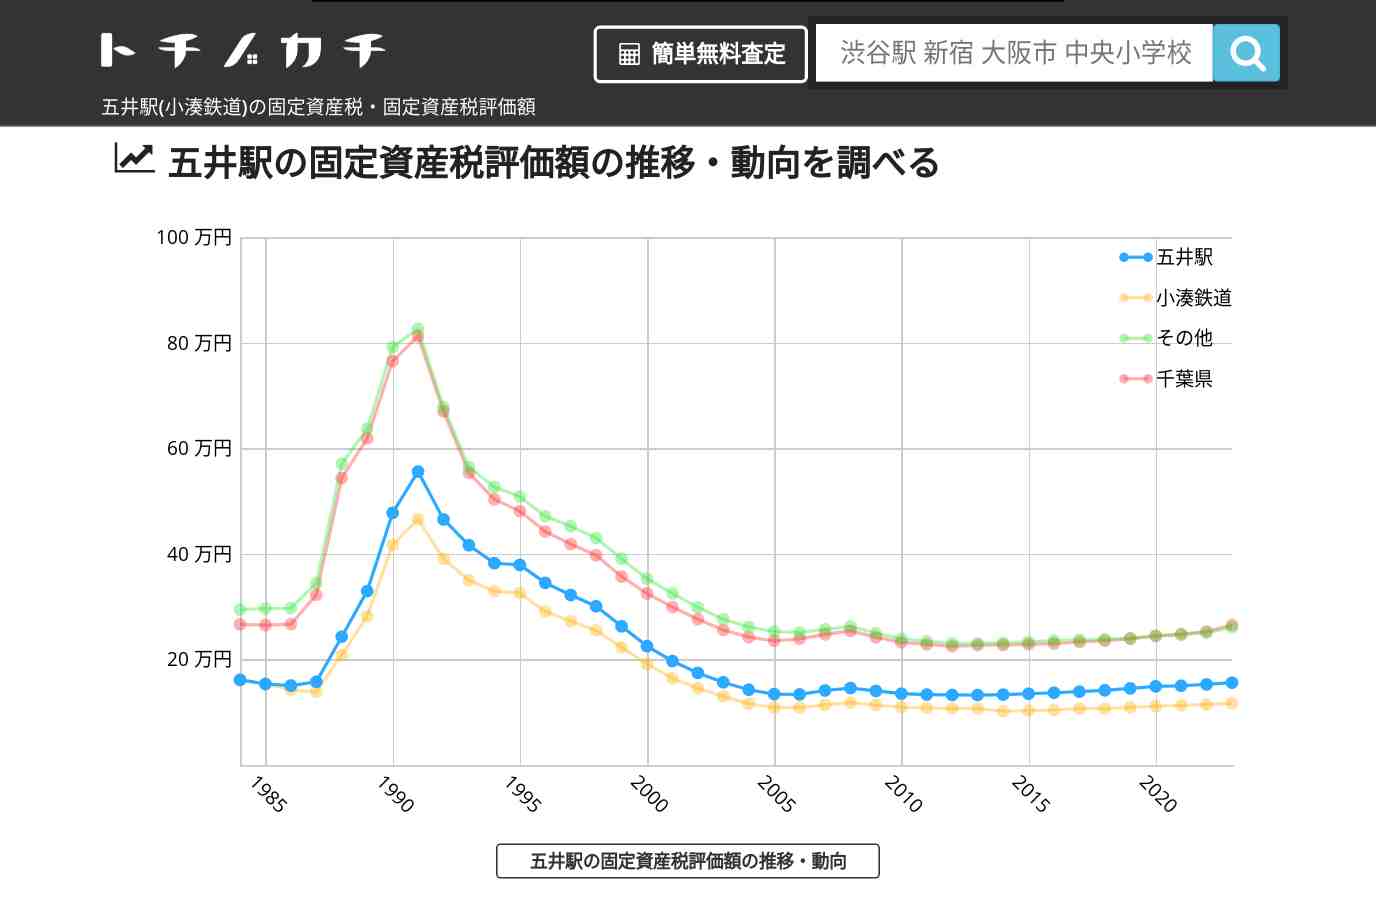 五井駅(小湊鉄道)の固定資産税・固定資産税評価額 | トチノカチ